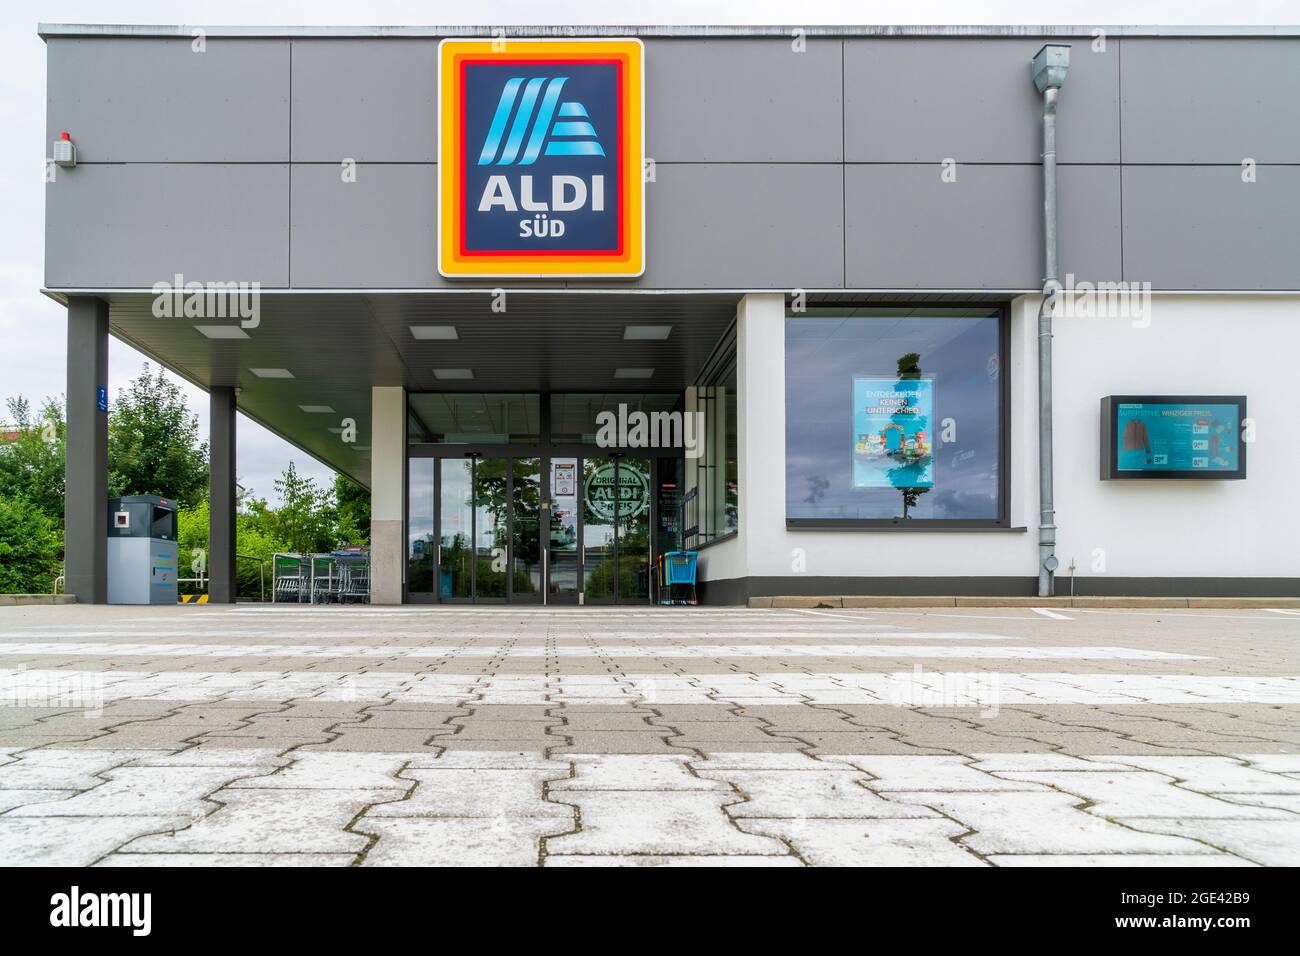 Supermarkt Deutschland High Resolution Stock Photography and Images - Alamy